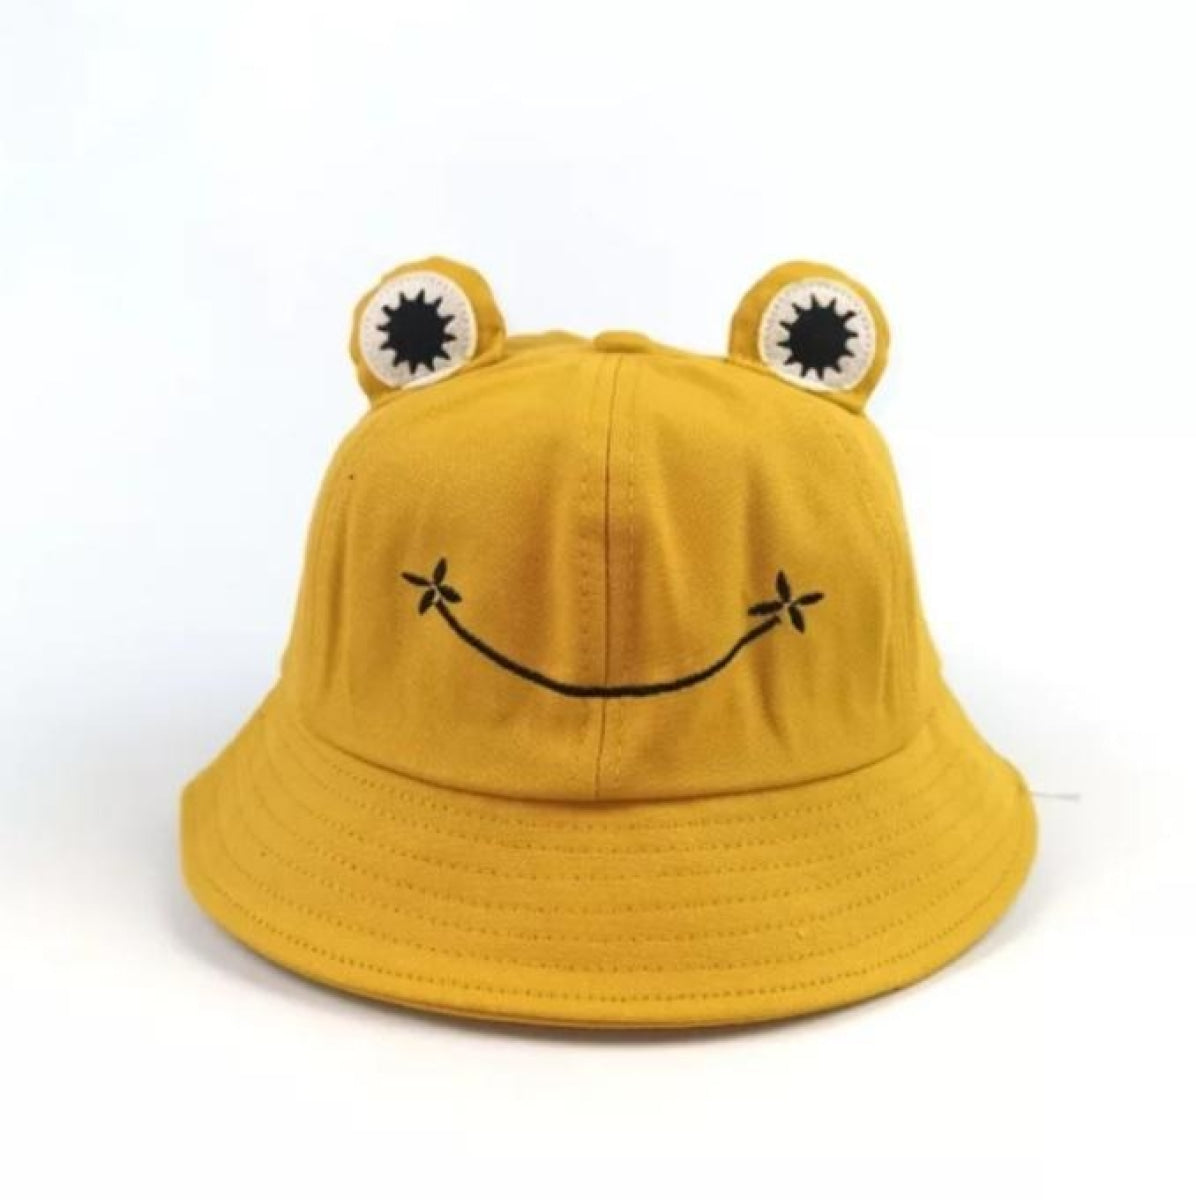 Frog Hat Floppy Female Sunhat Drawstring Adjustable Kids Childrens Hats Clothing